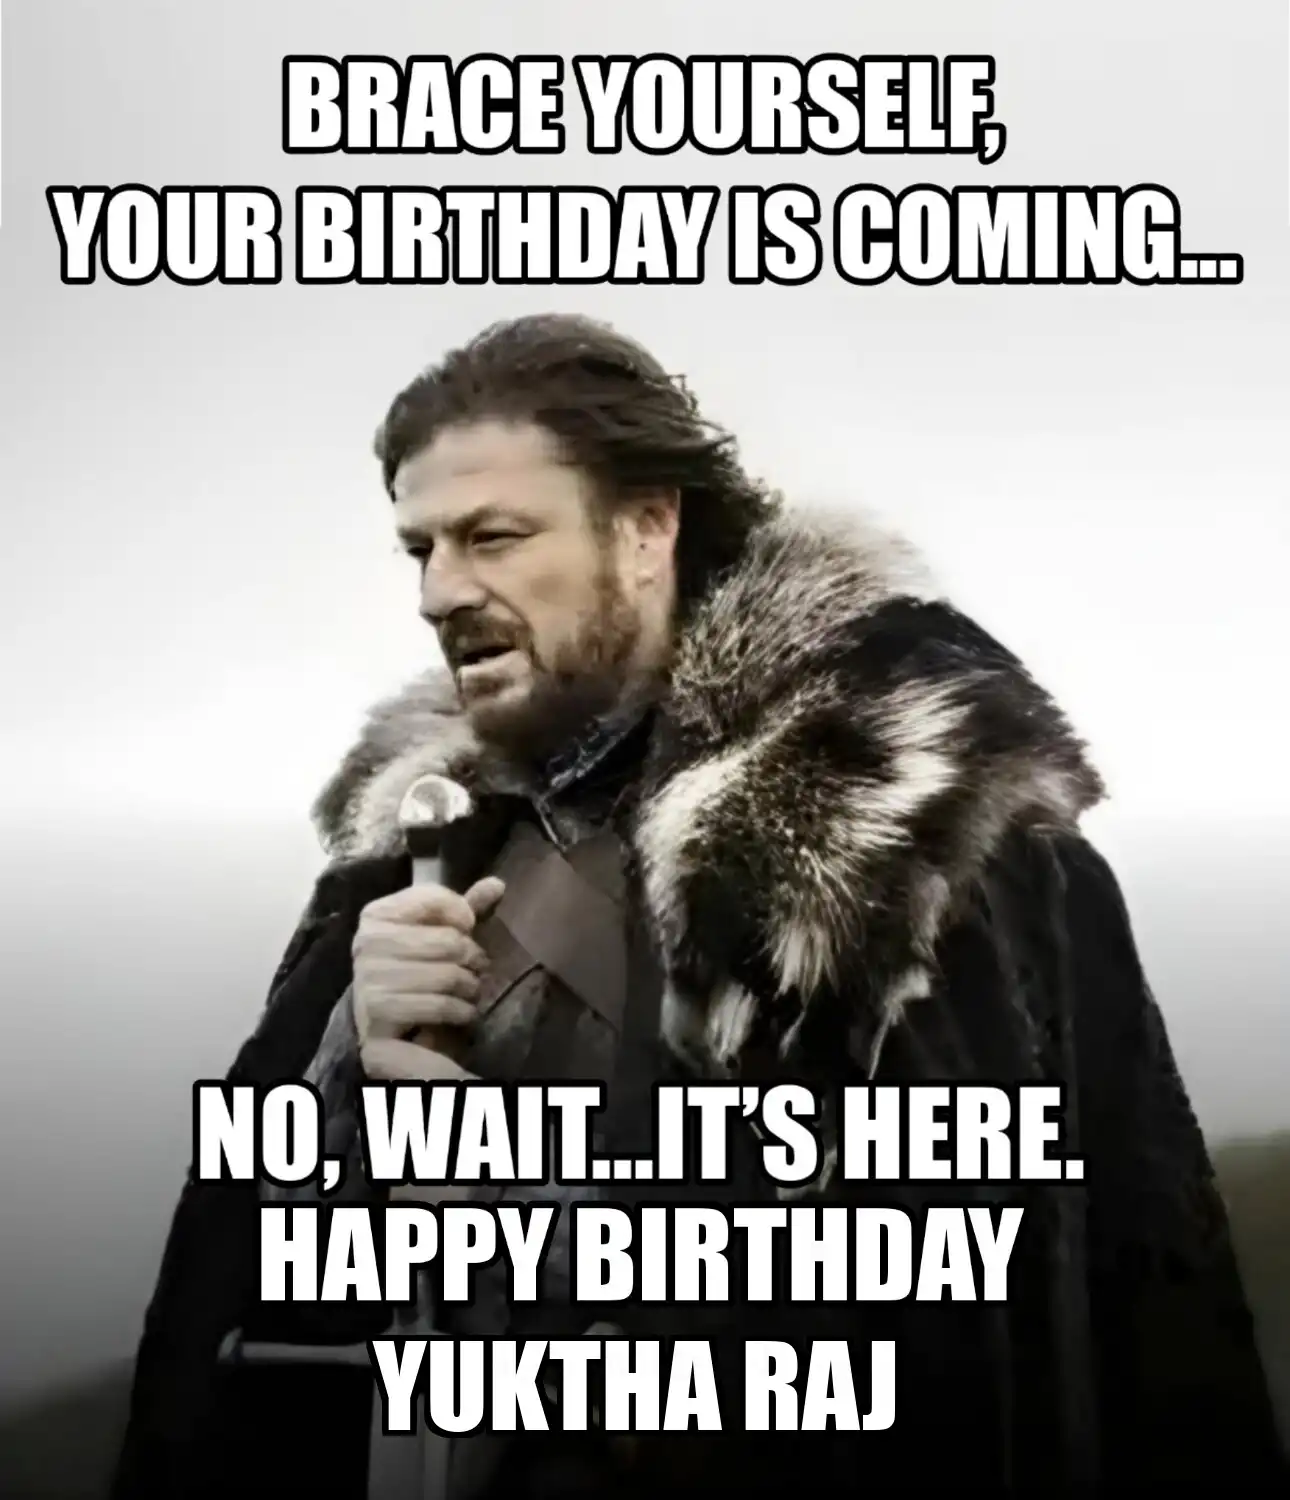 Happy Birthday Yuktha raj Brace Yourself Your Birthday Is Coming Meme